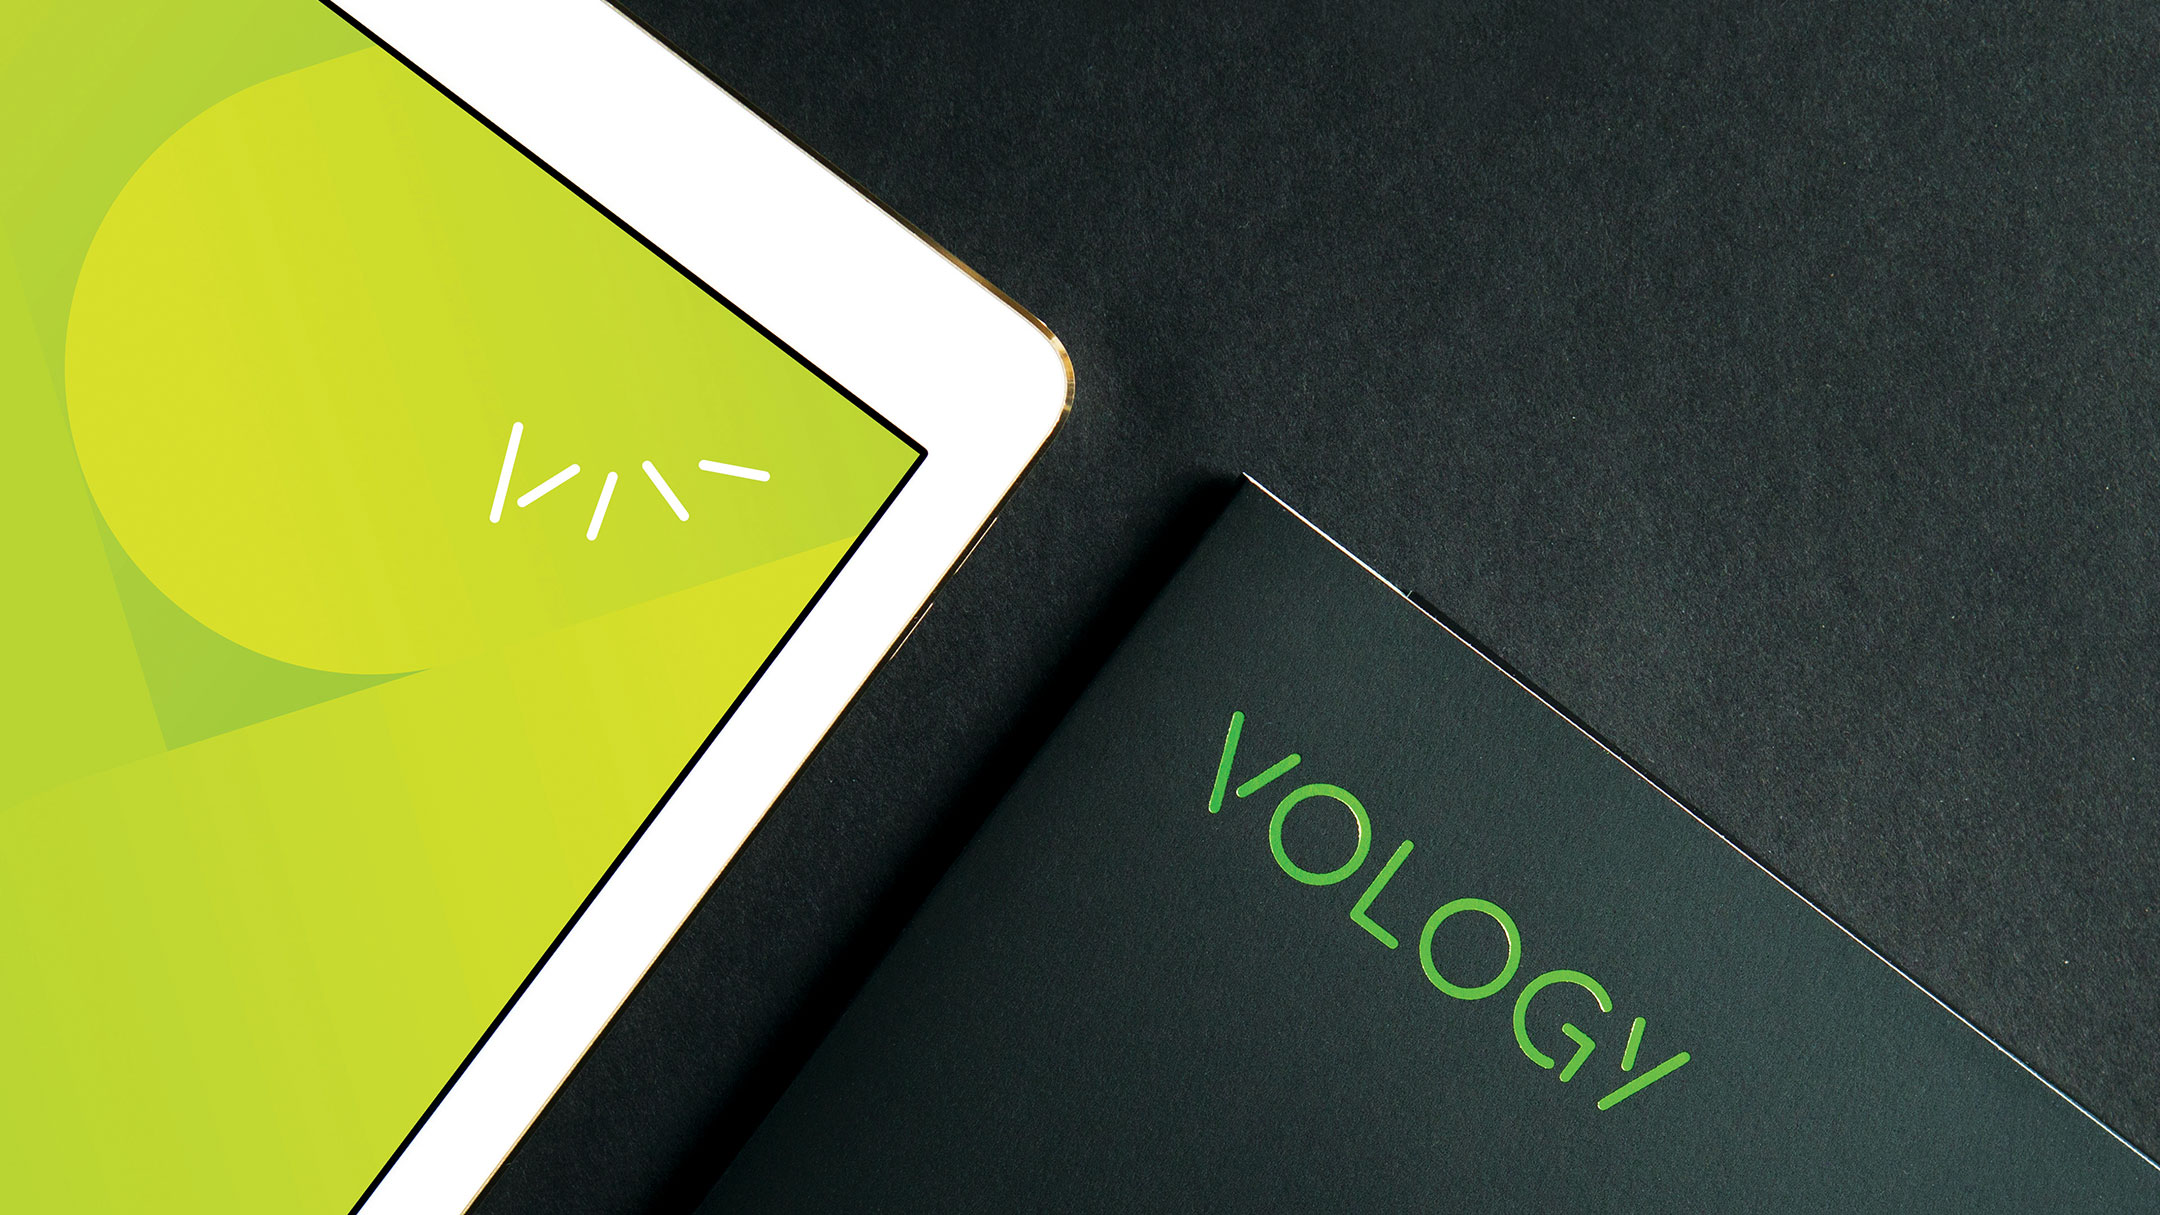 Vology logo on folder and brand mark on iPad.